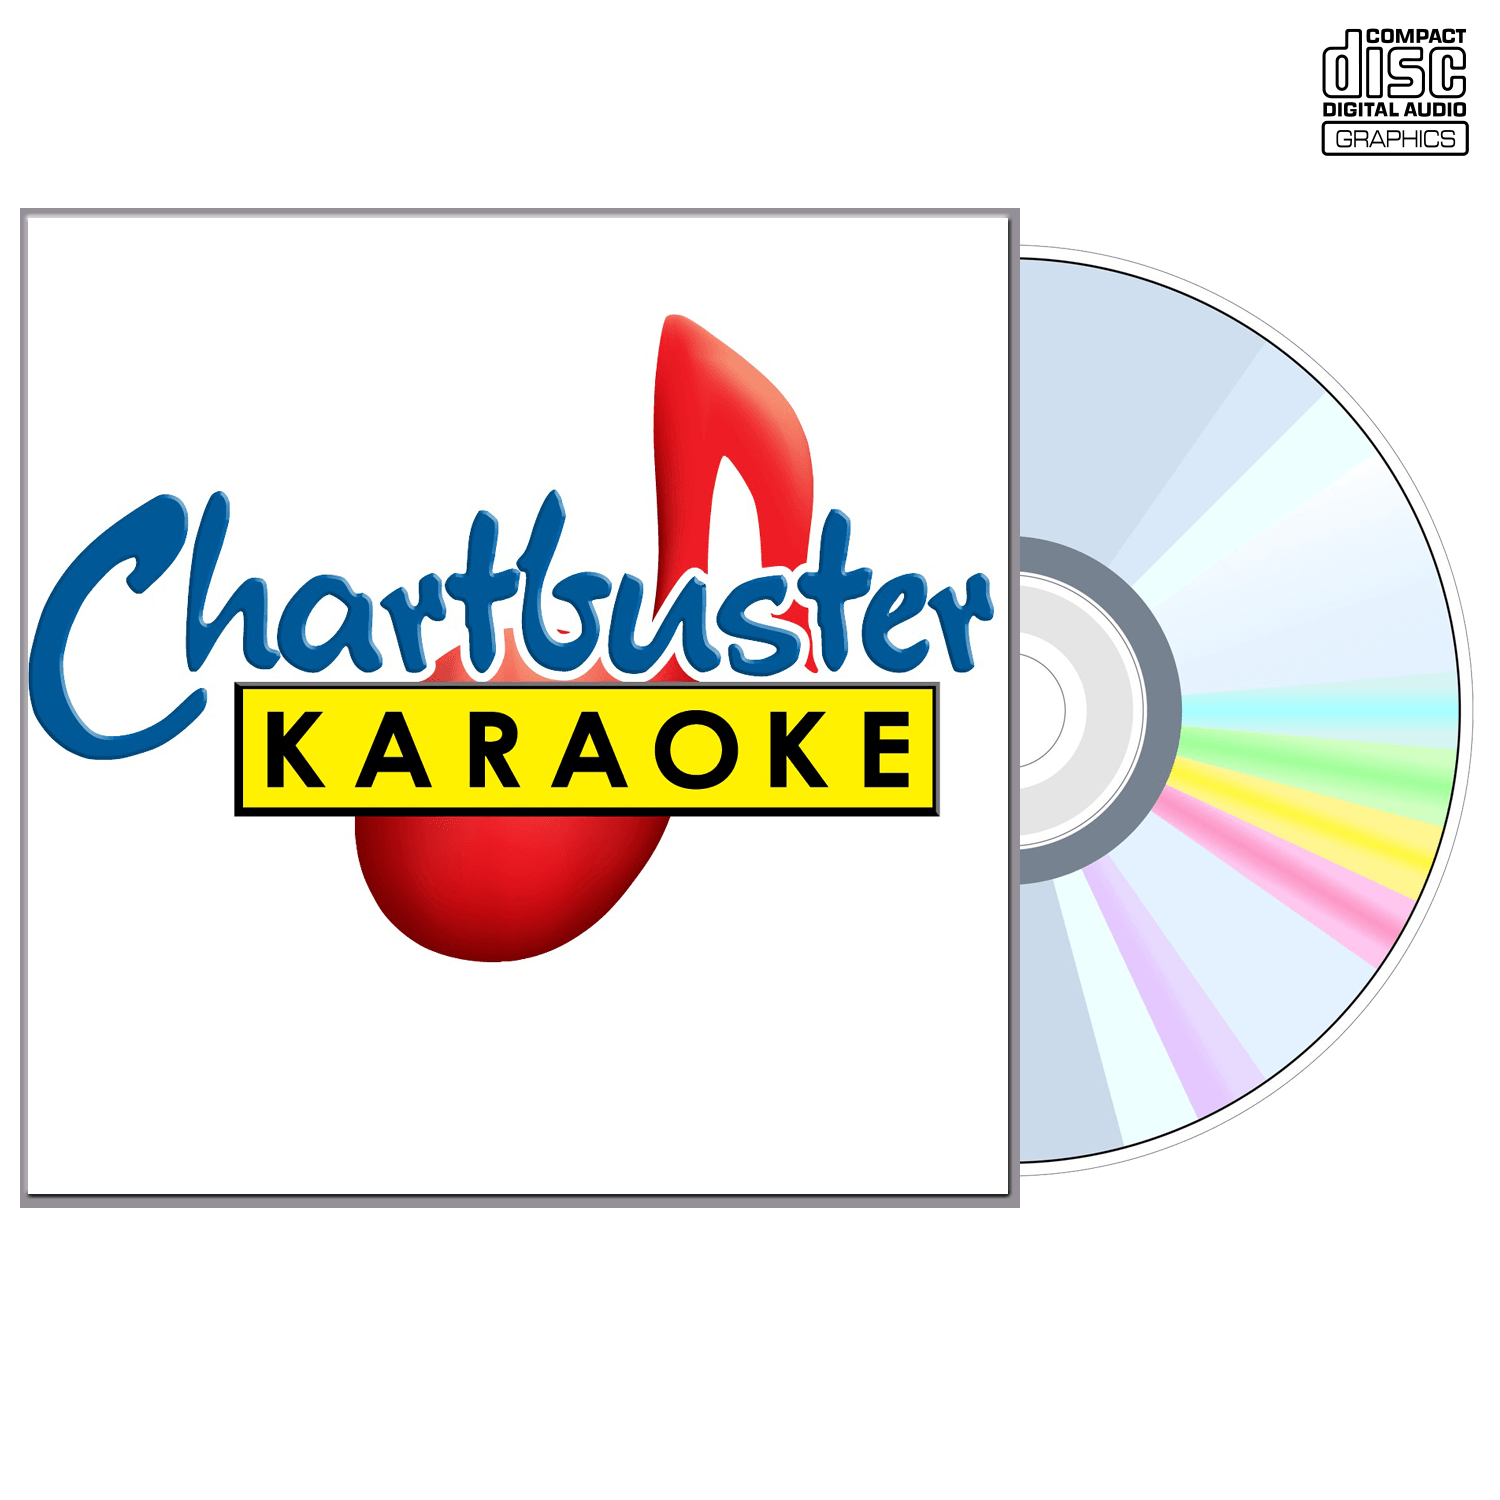 Anthony Smith - CD+G - Chartbuster Karaoke - Karaoke Home Entertainment